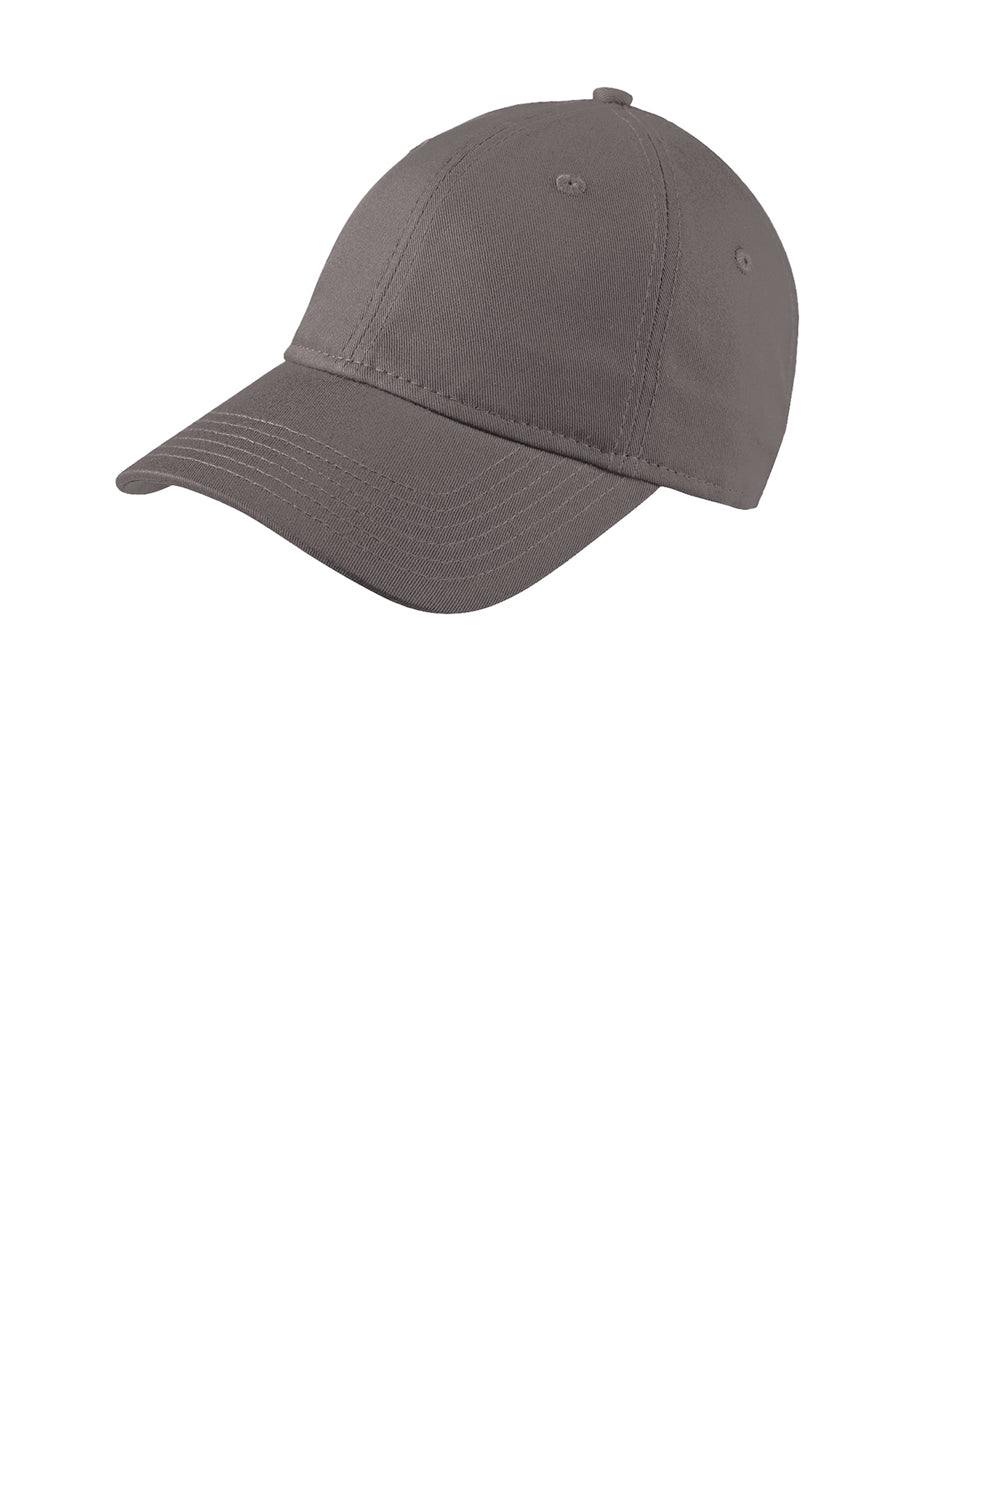 New Era NE201 Mens Adjustable Hat Graphite Grey Front